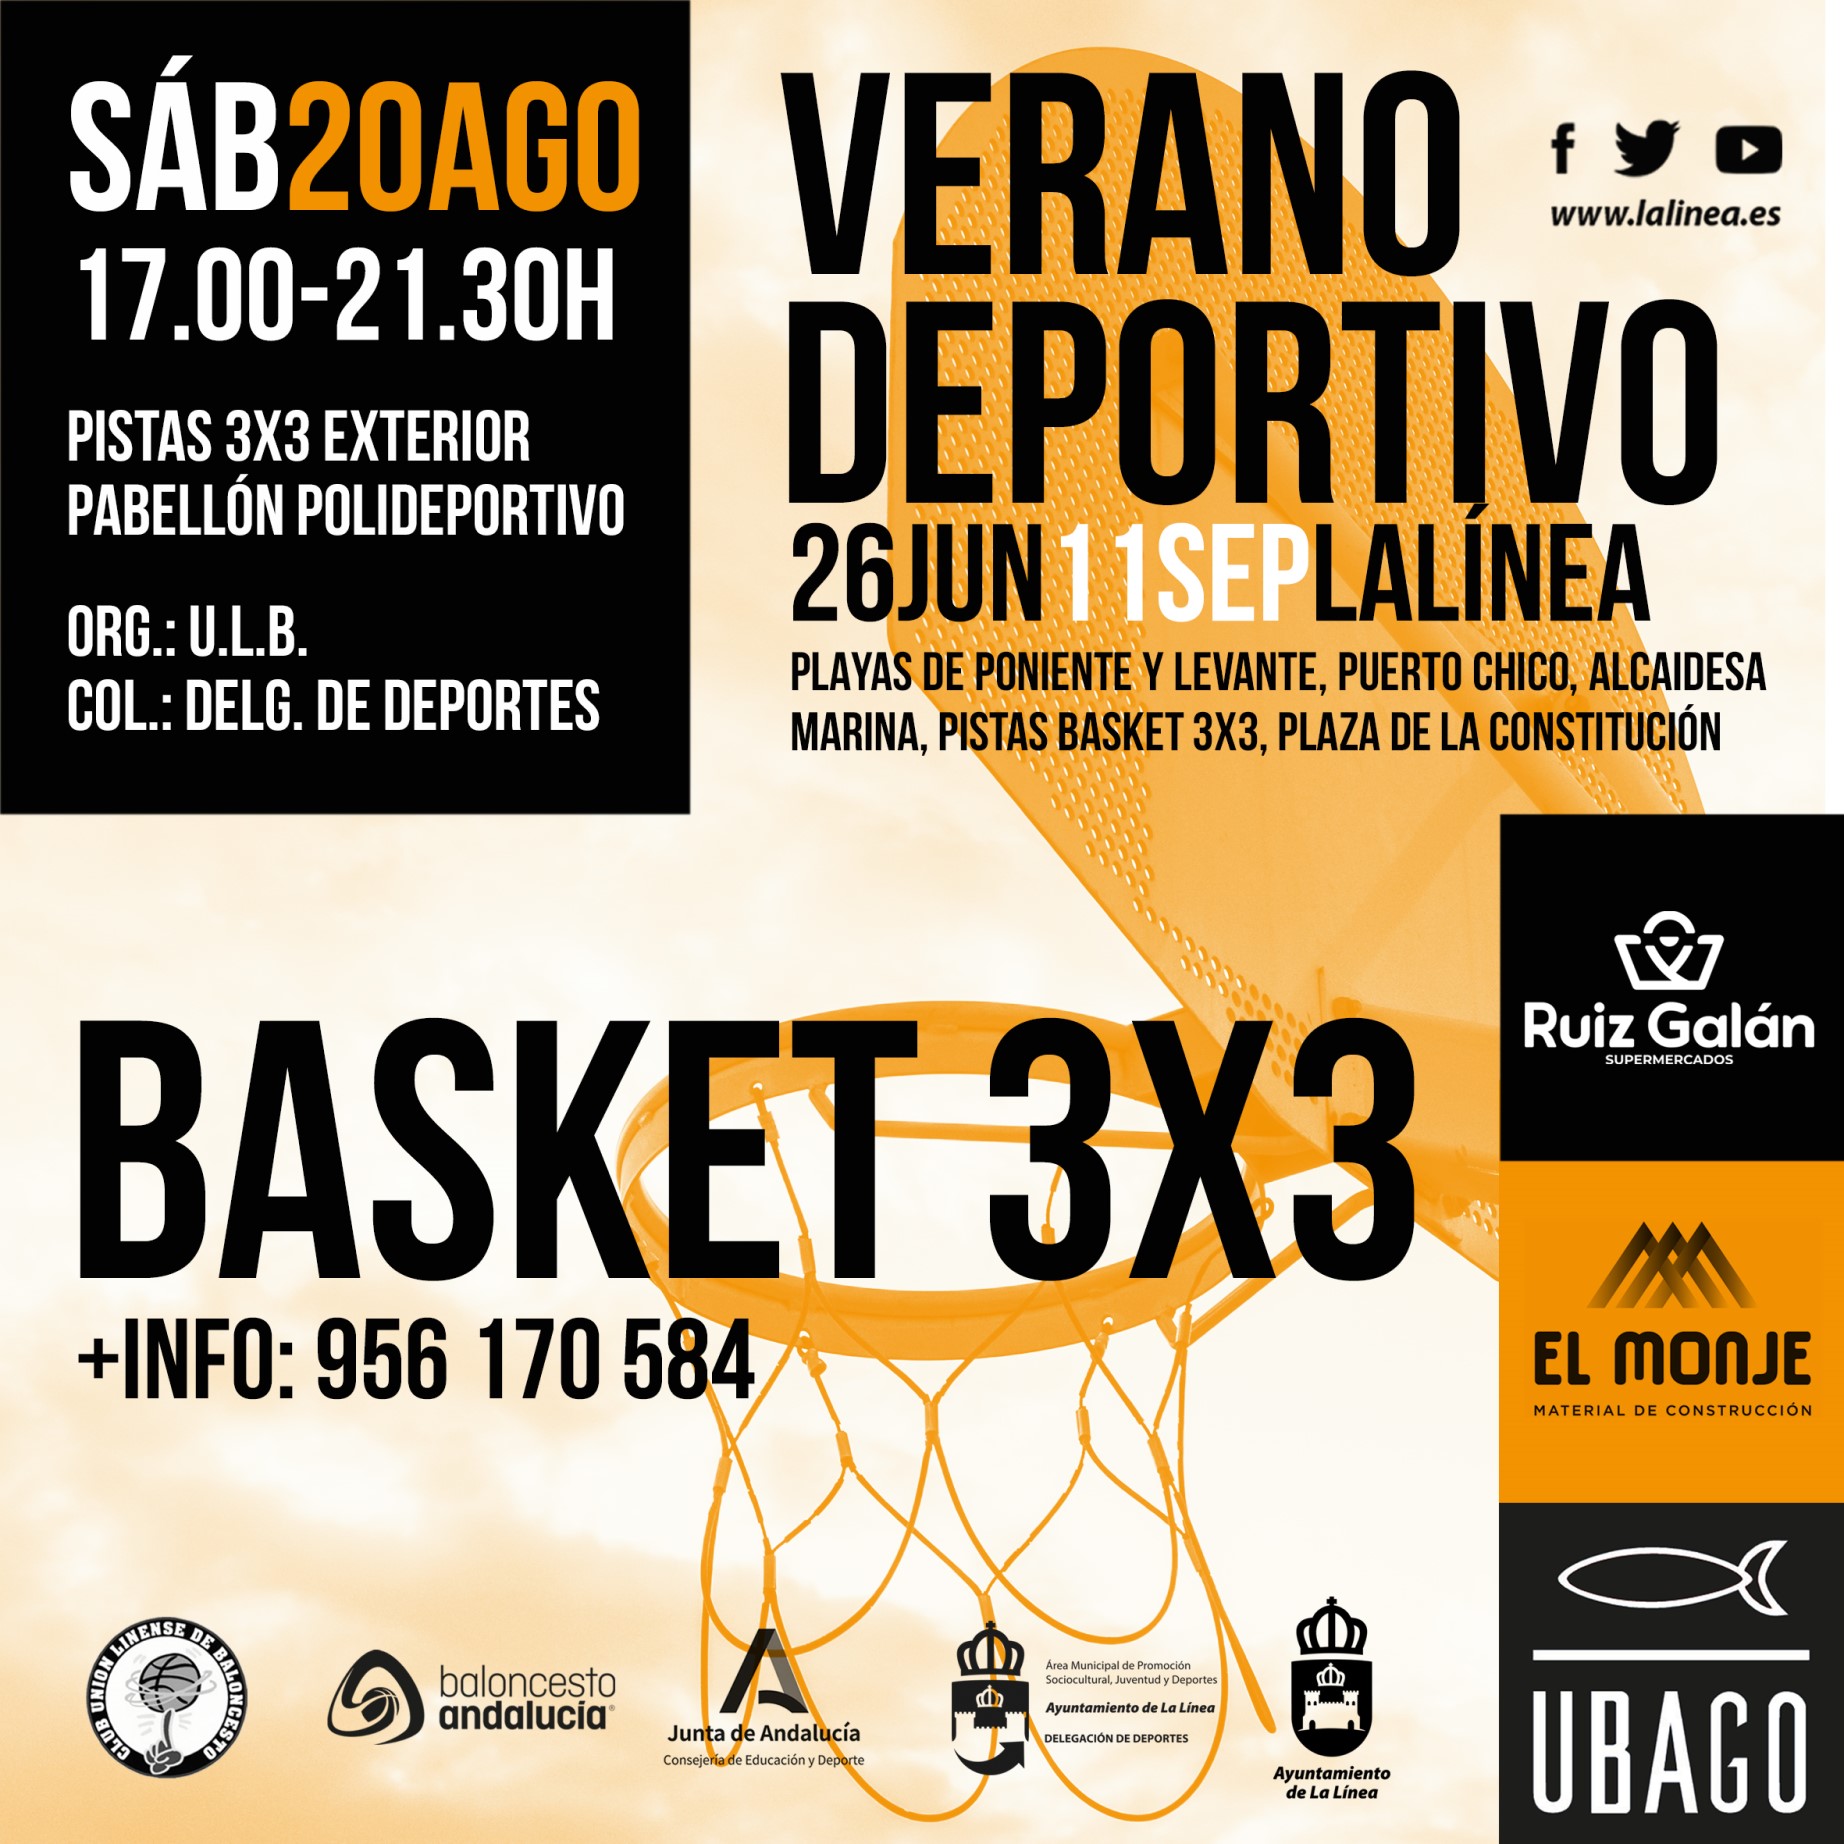 Basket 3x3 verano deportivo